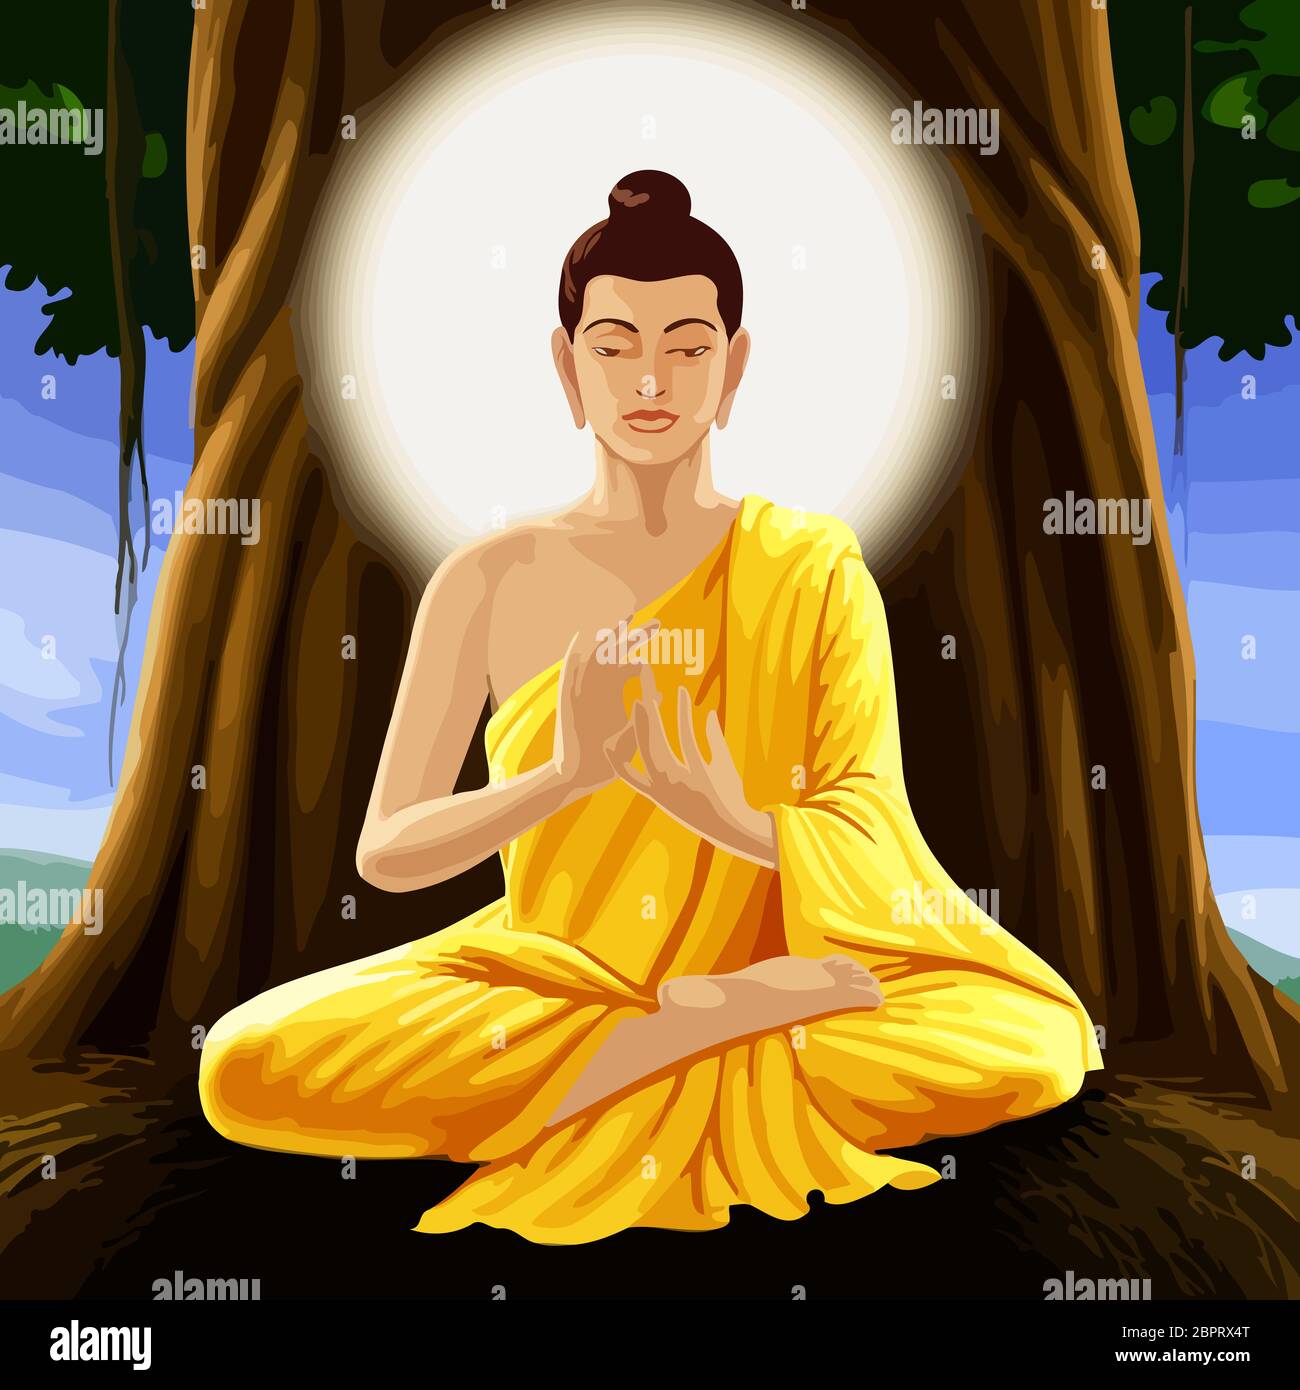 Gautama buddha peace wisdom meditating enlighted position illustration ...